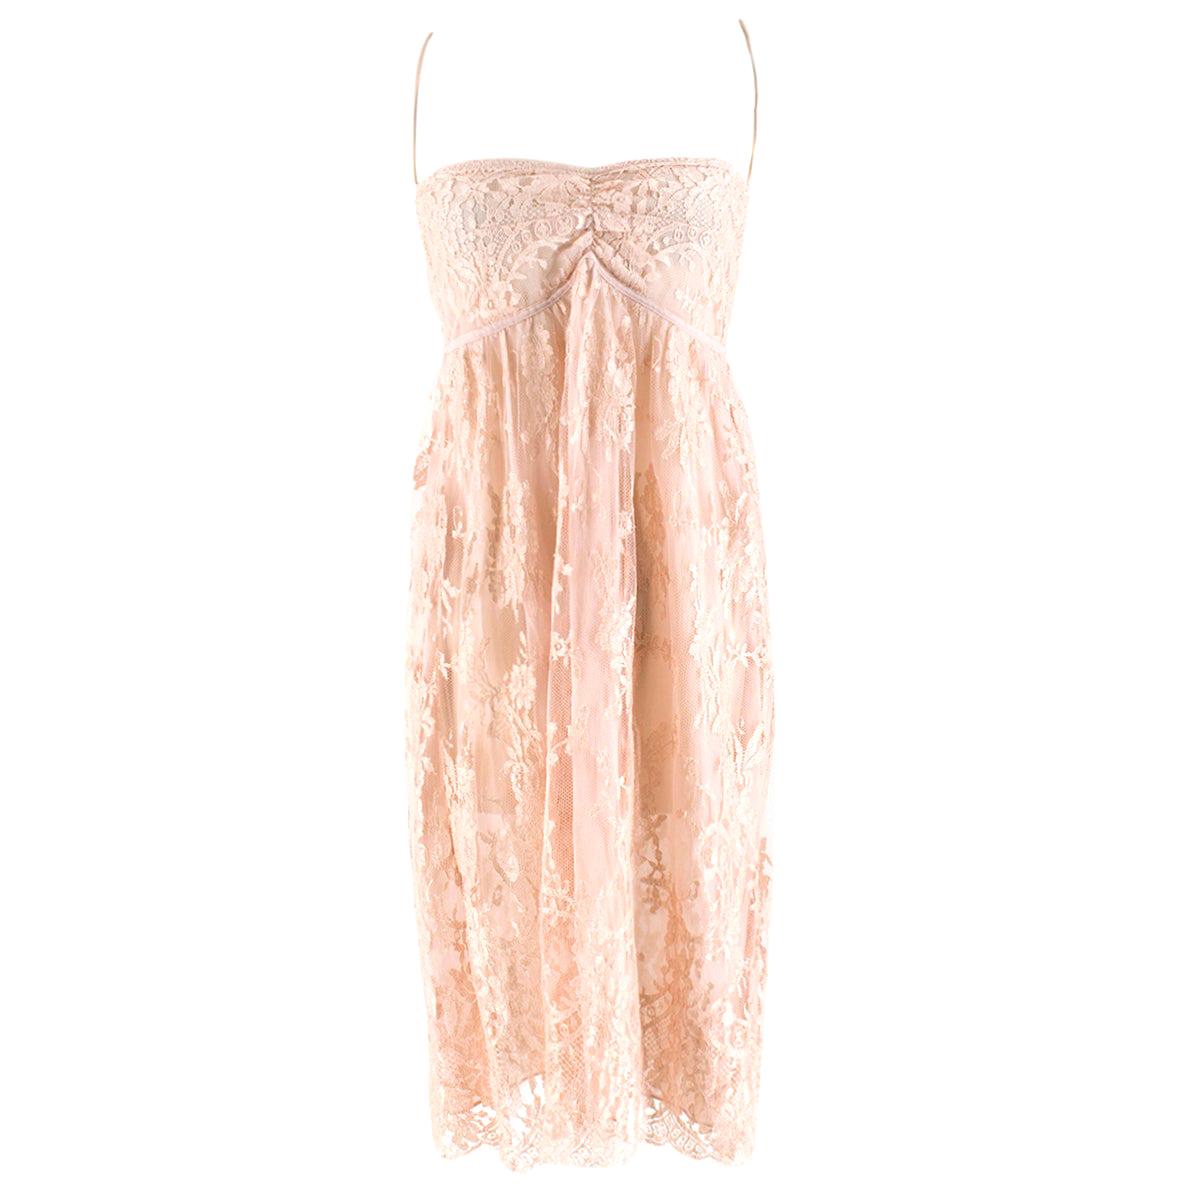 Rosamosario Nude Pink Lace Slip Dress - Size US 6